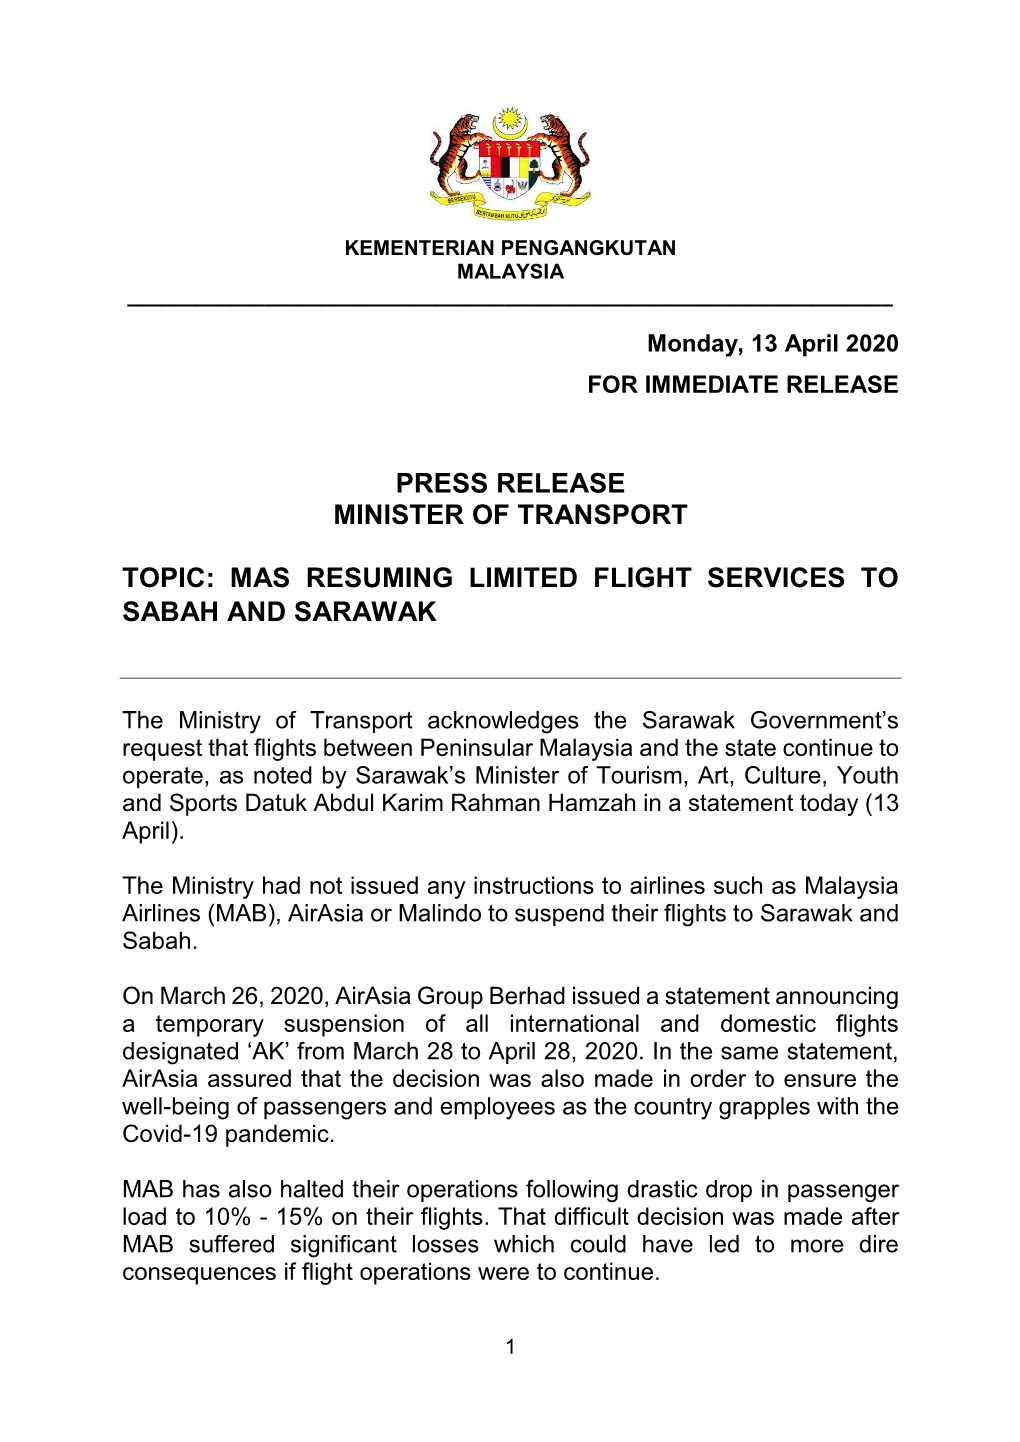 Resuming Limited Flight Services to Sabah and Sarawak